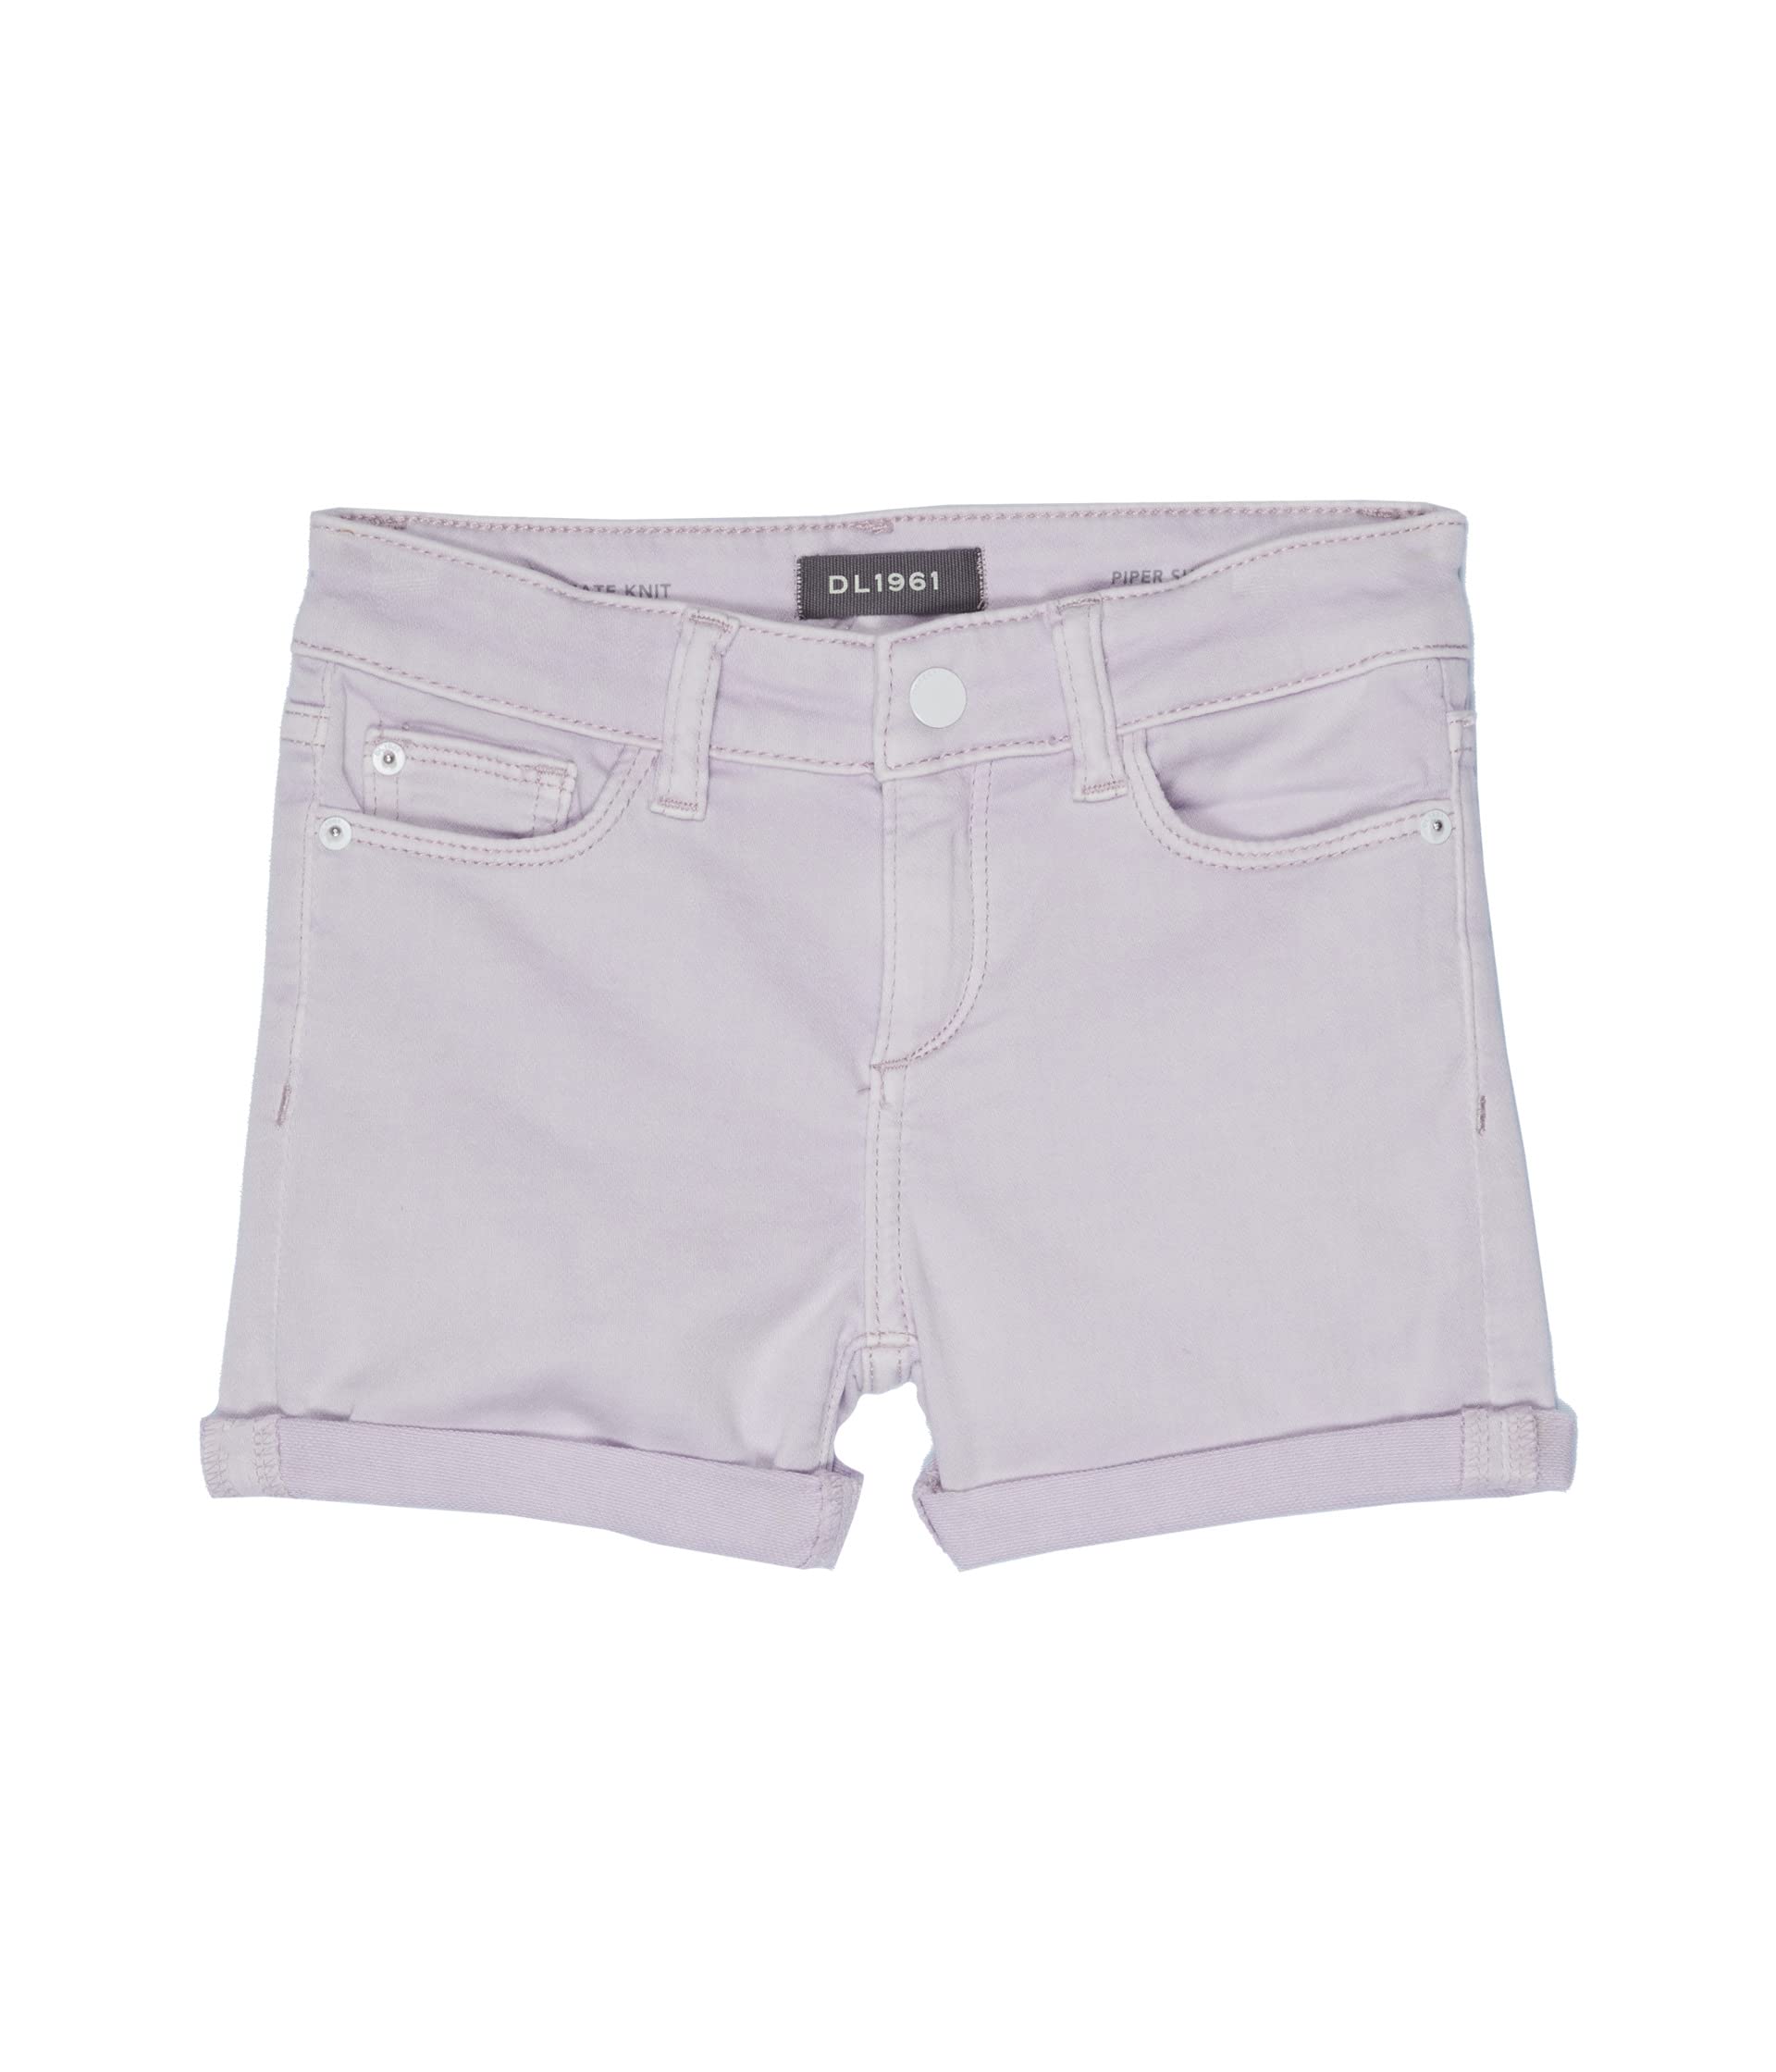 Шорты DL1961 Kids, Piper Knit Cuffed Shorts in Lilac